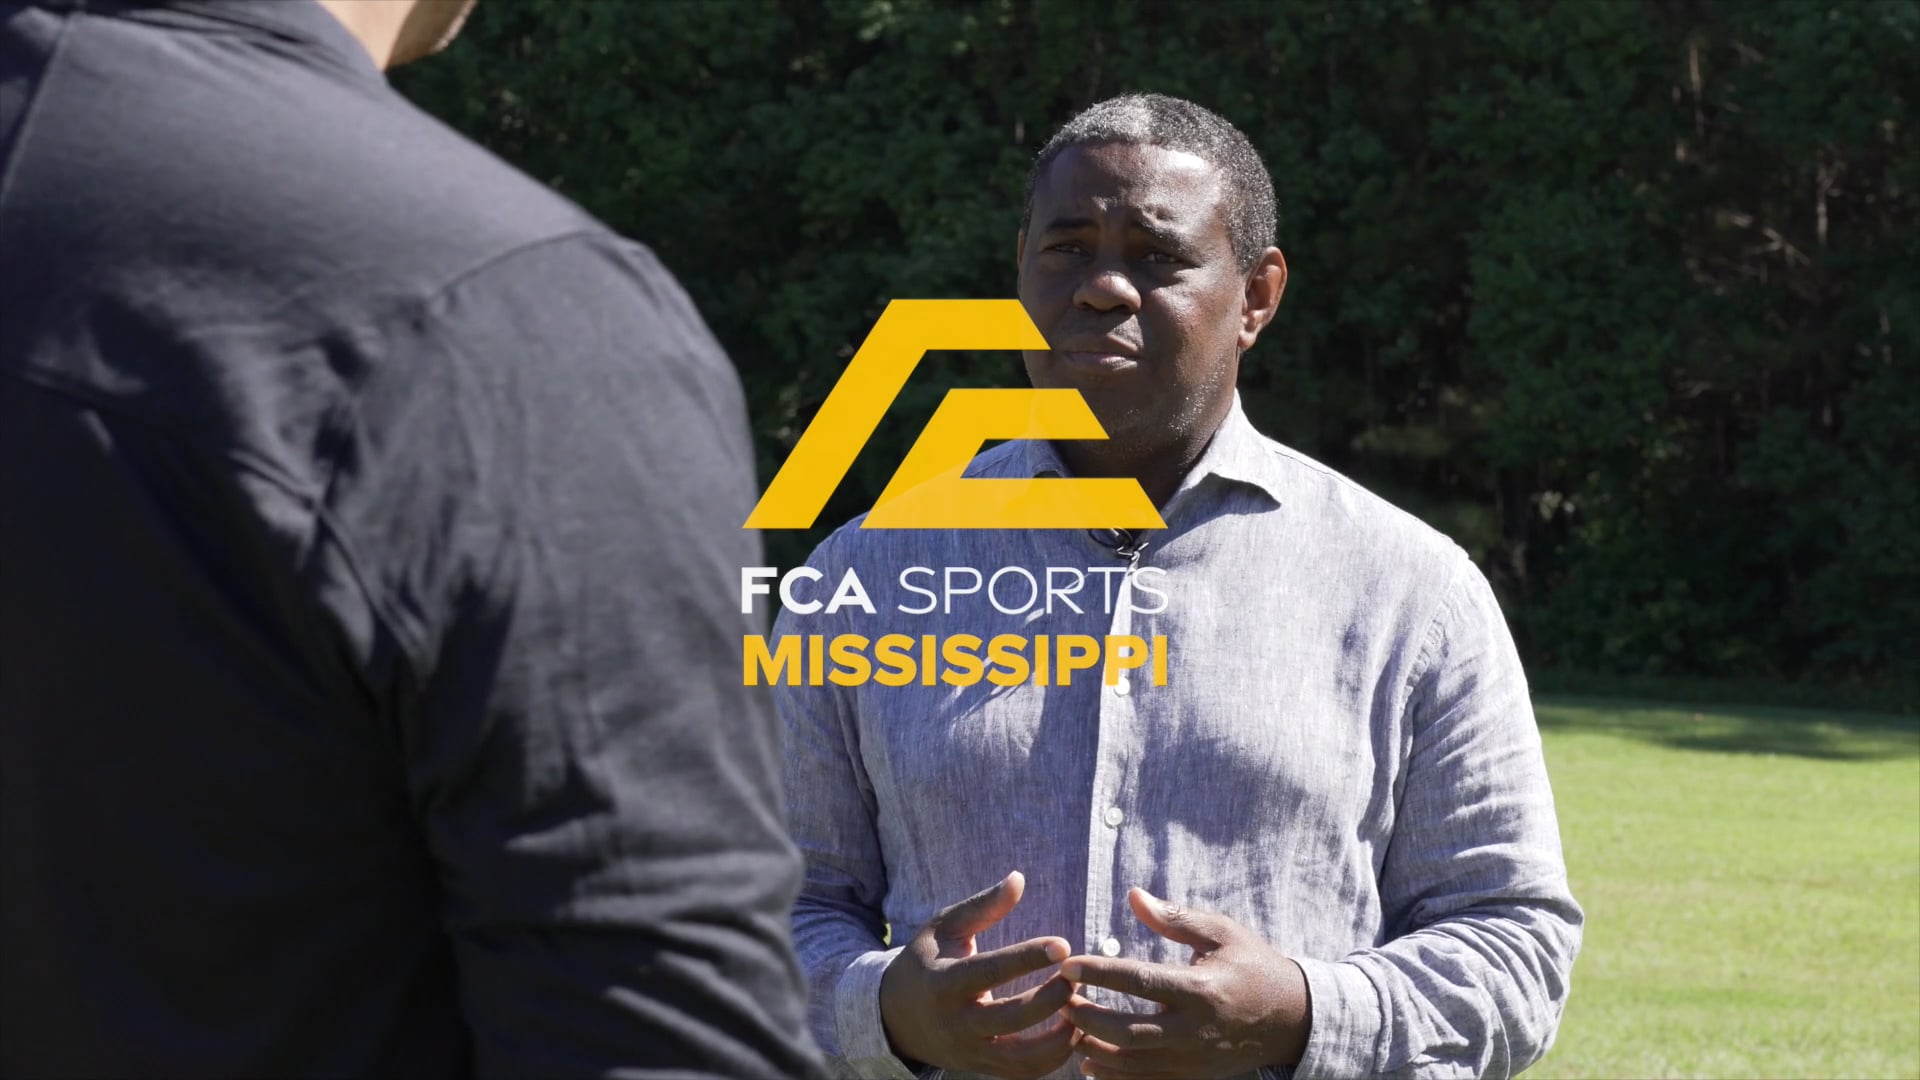 FCA Sports: Mississippi on Vimeo